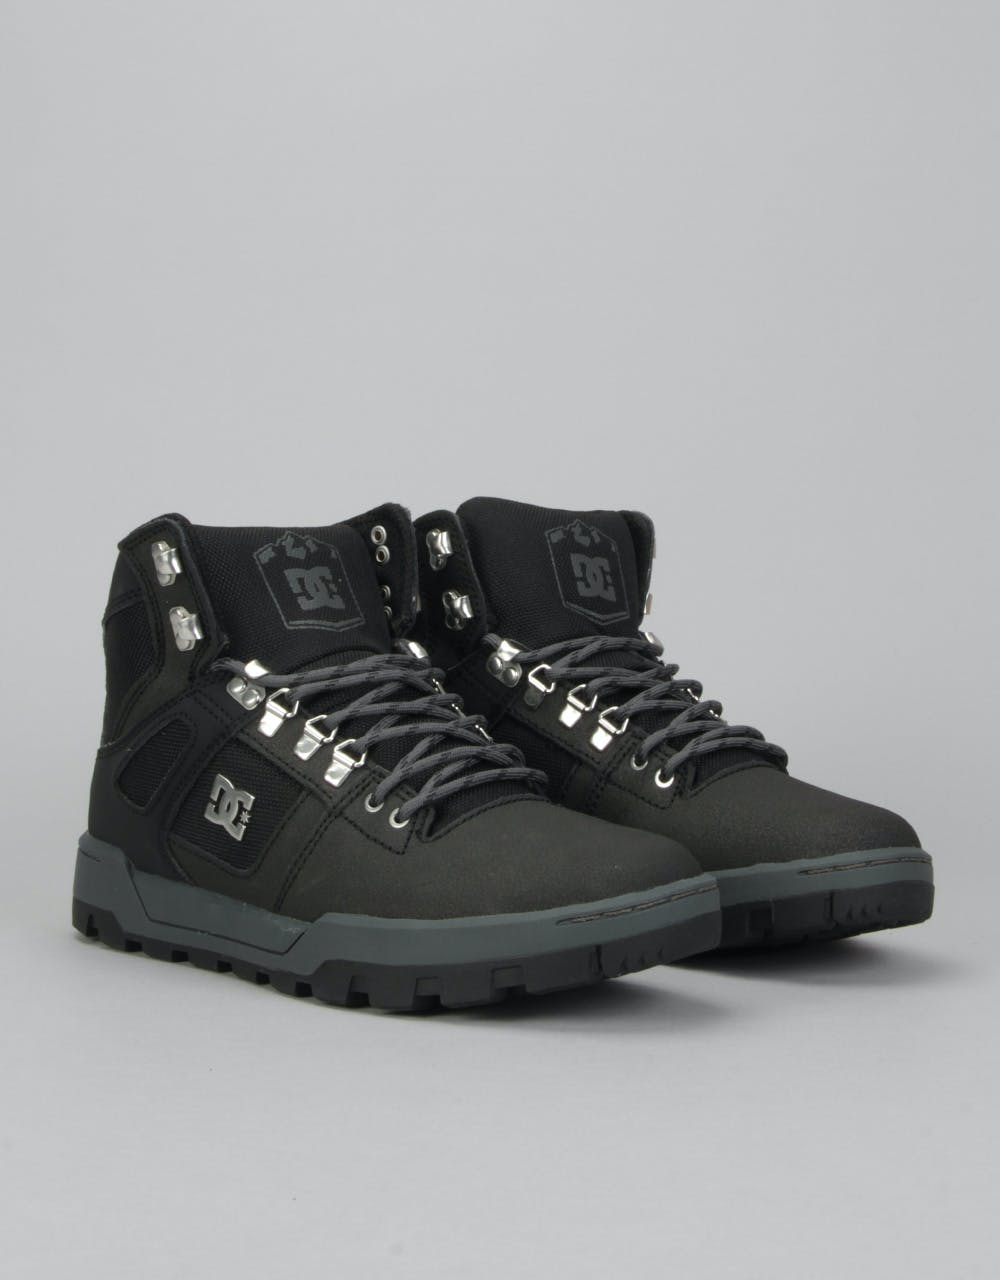 DC Spartan High WR Boots - Black/Black/Dark Grey